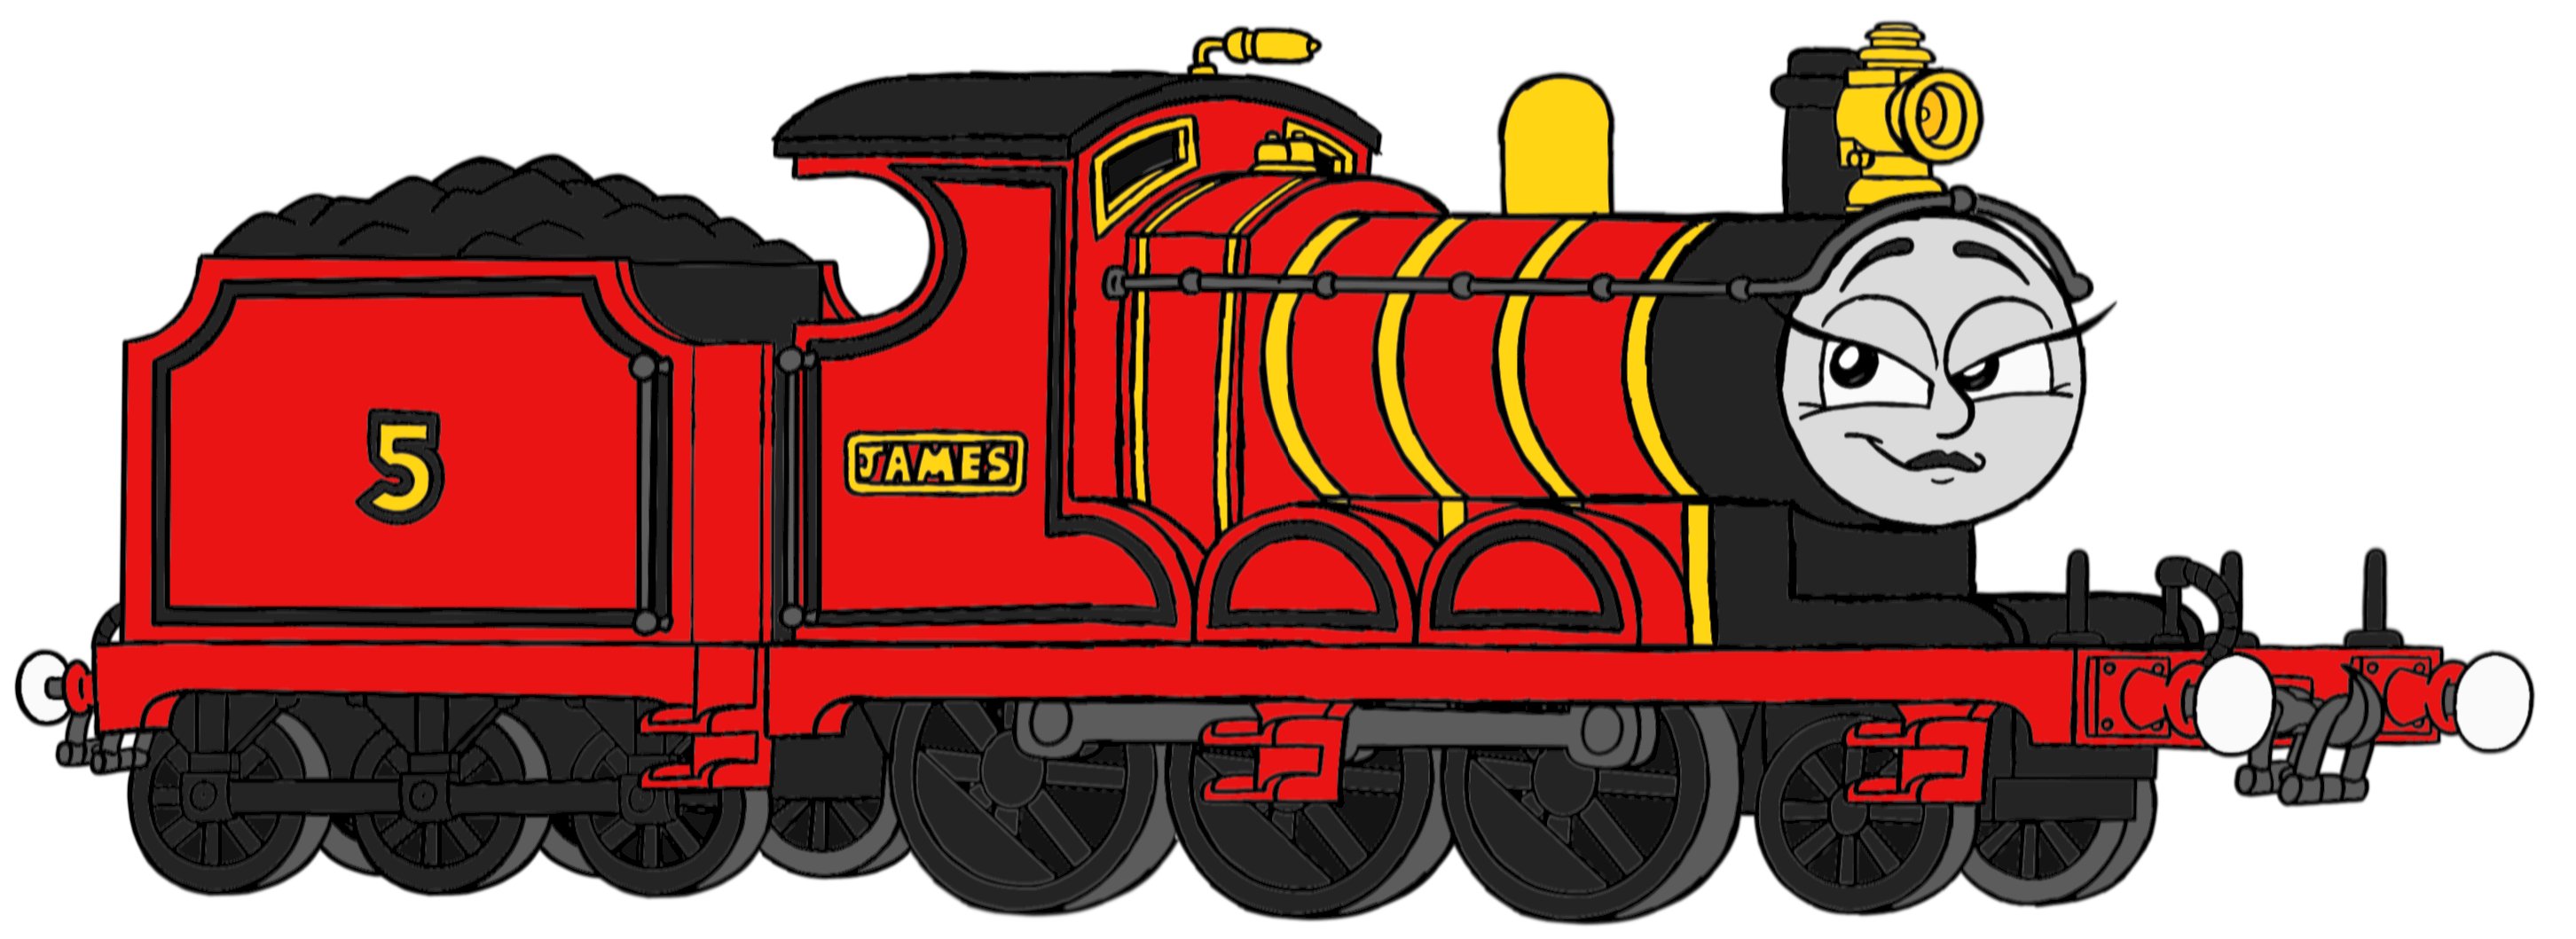 WendayTheMashedPotato01 (Commissions Open!) on X: James the Splendid Red  Engine, this time wearing some fabulous makeup #thomasthetankengine  #thomasandfriends #railwayseries  / X